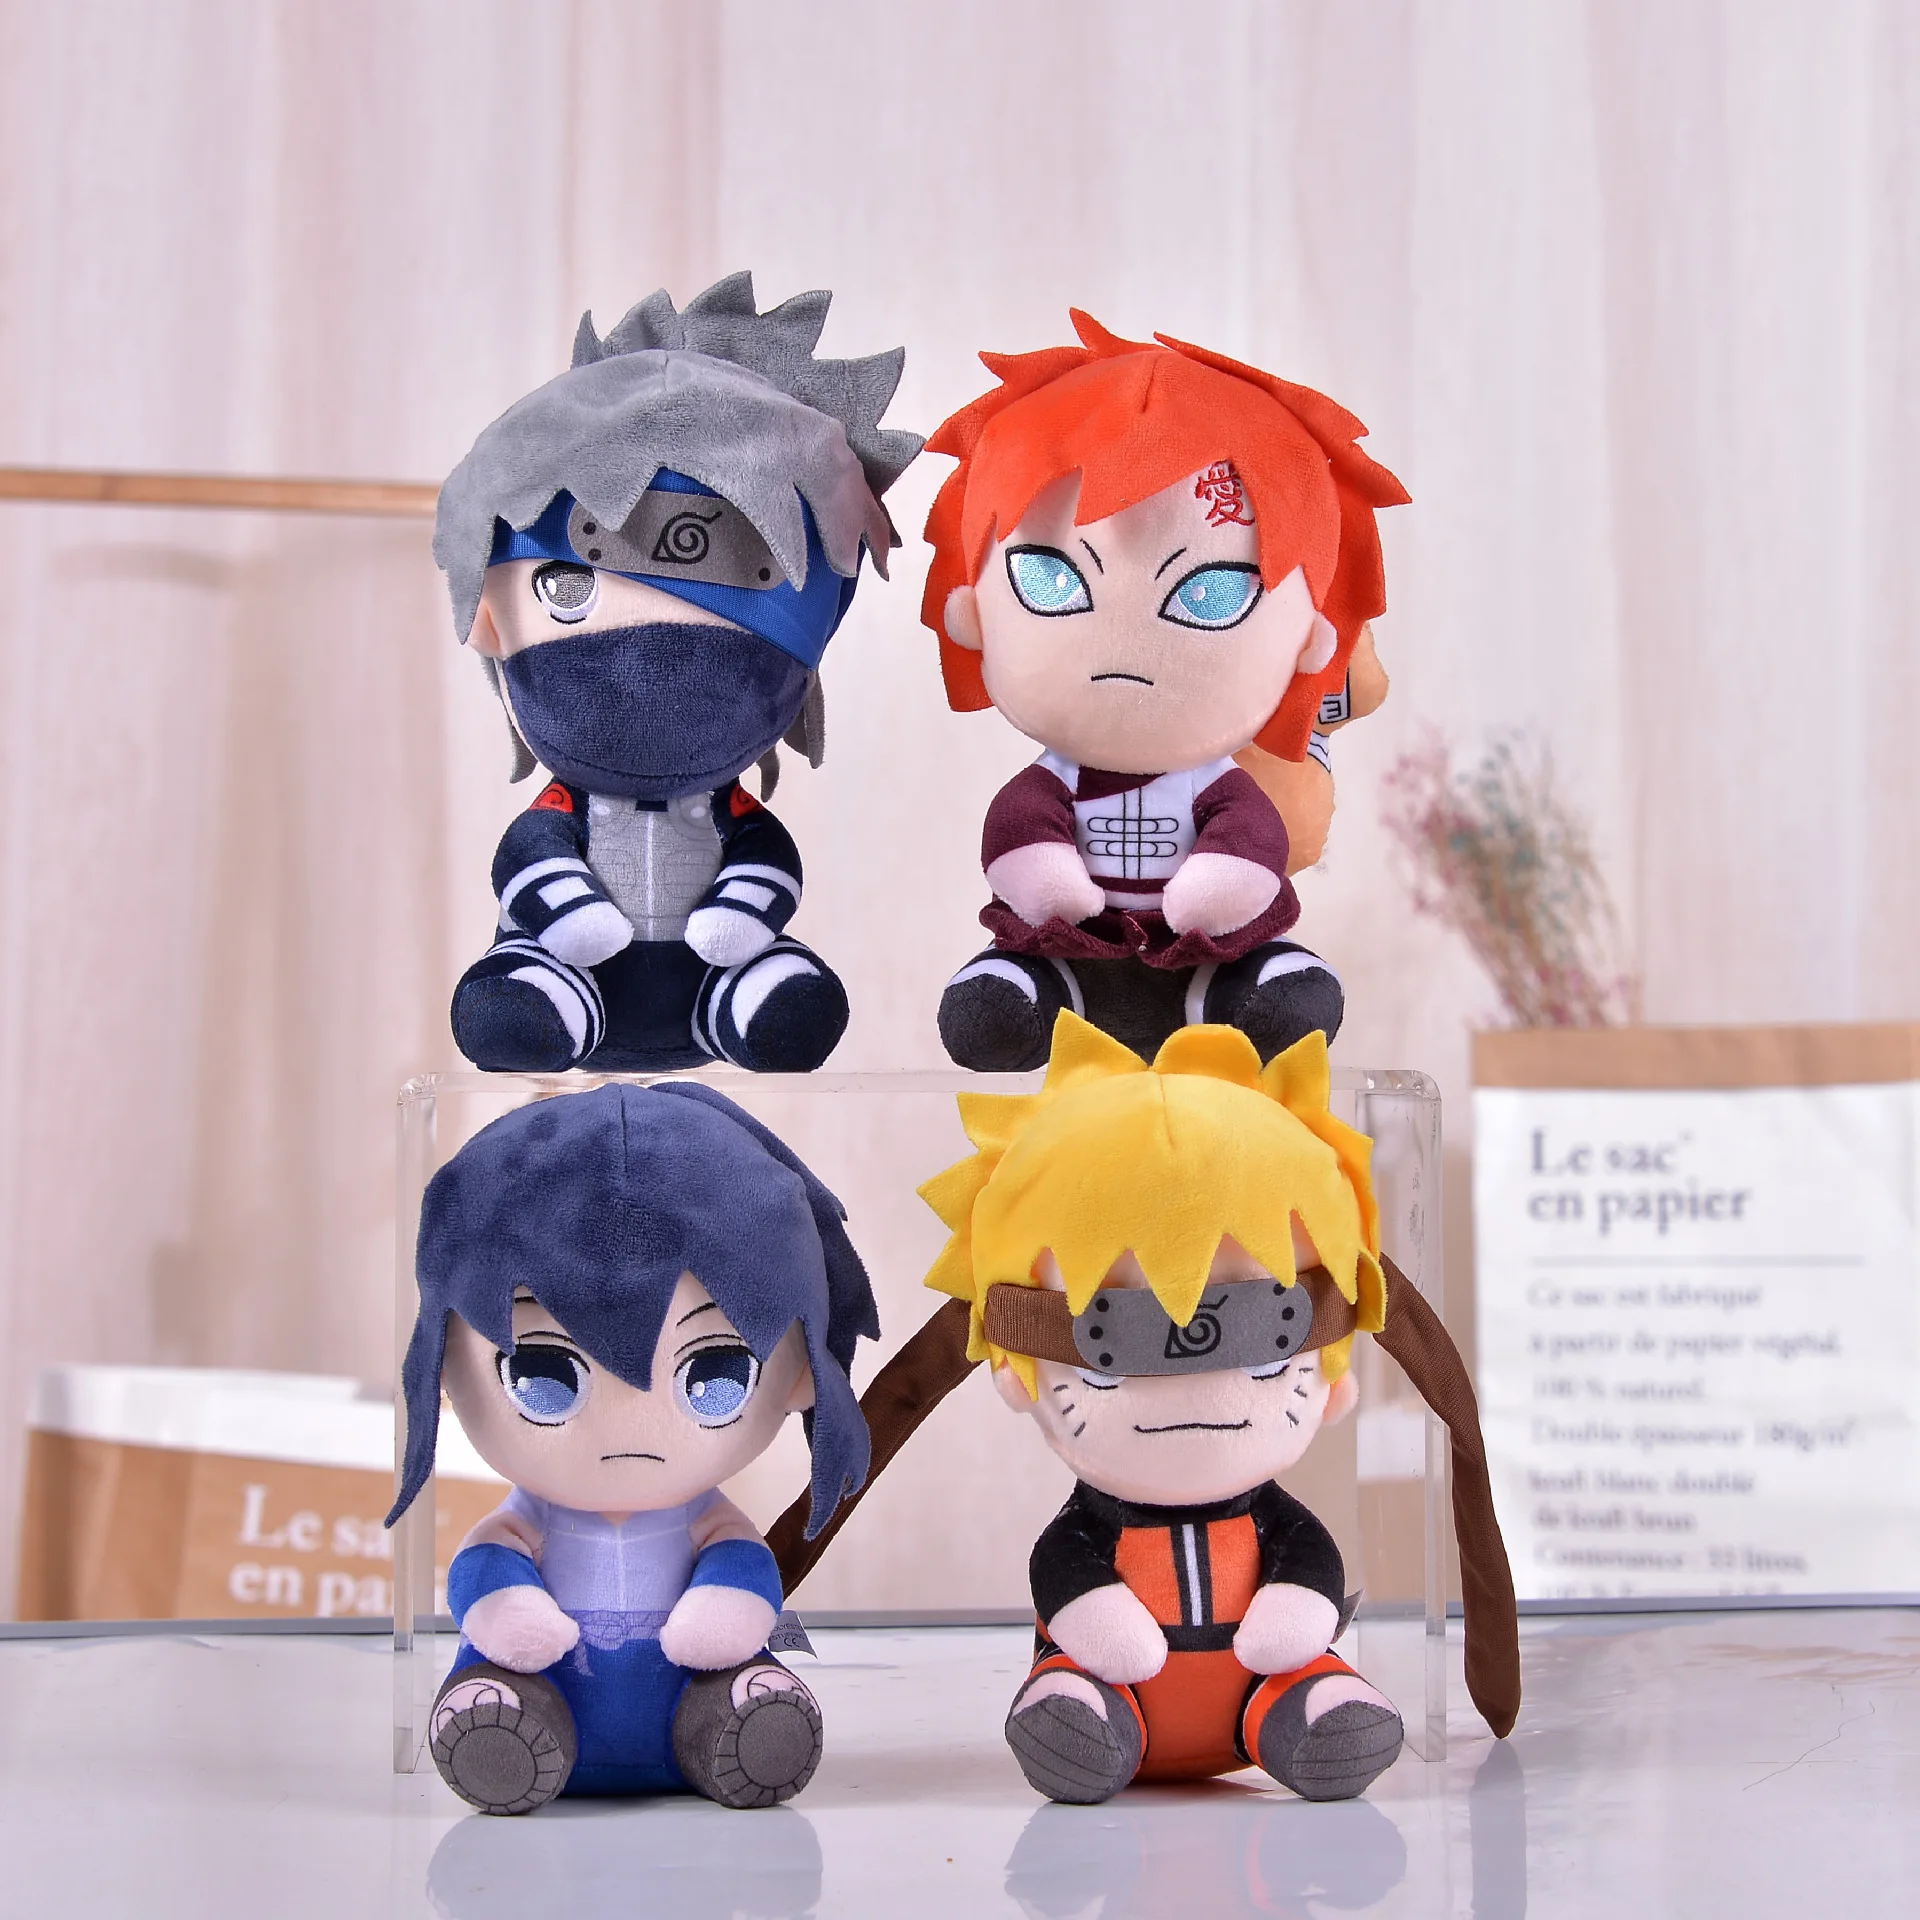 

20cm Japan Anime Figures Plush Stuffed Toys Naruto Sasuke Gaara Kakashi Kawaii Decor Cartoon Pendant Doll Baby Birthday Gift